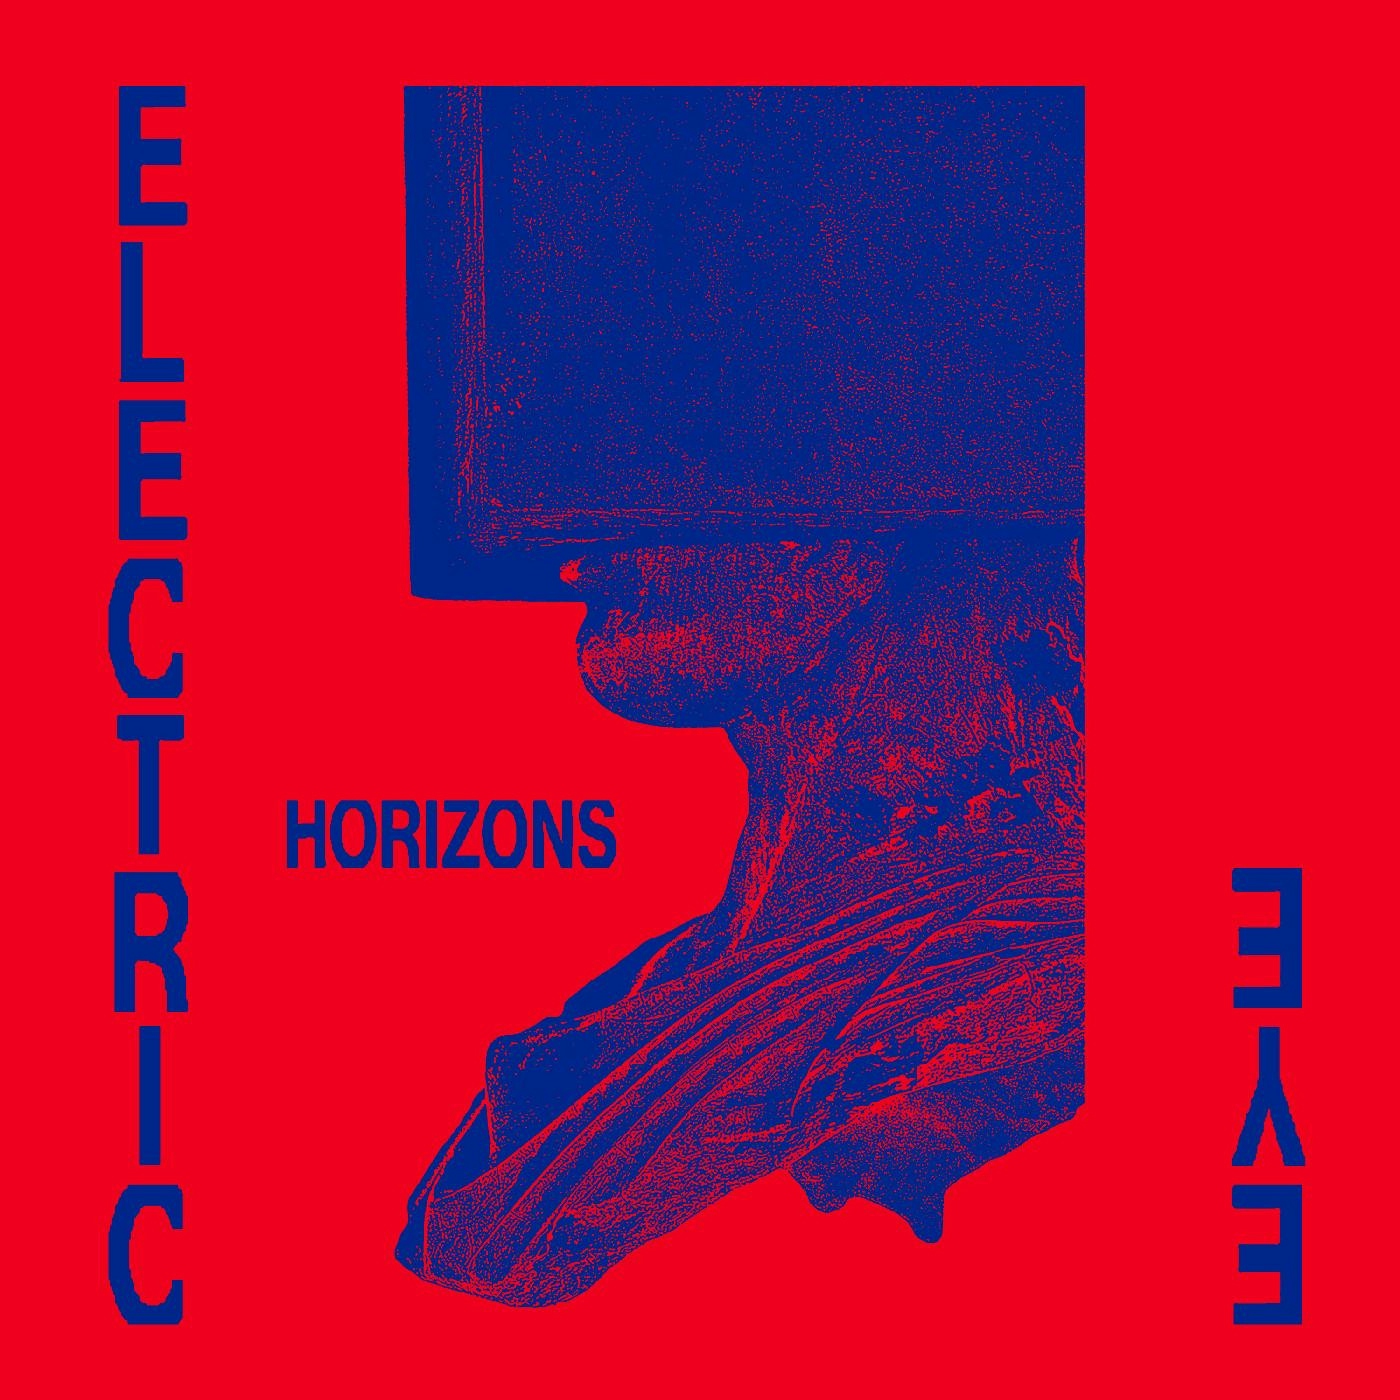 Album artwork for Horizons by Electric Eye